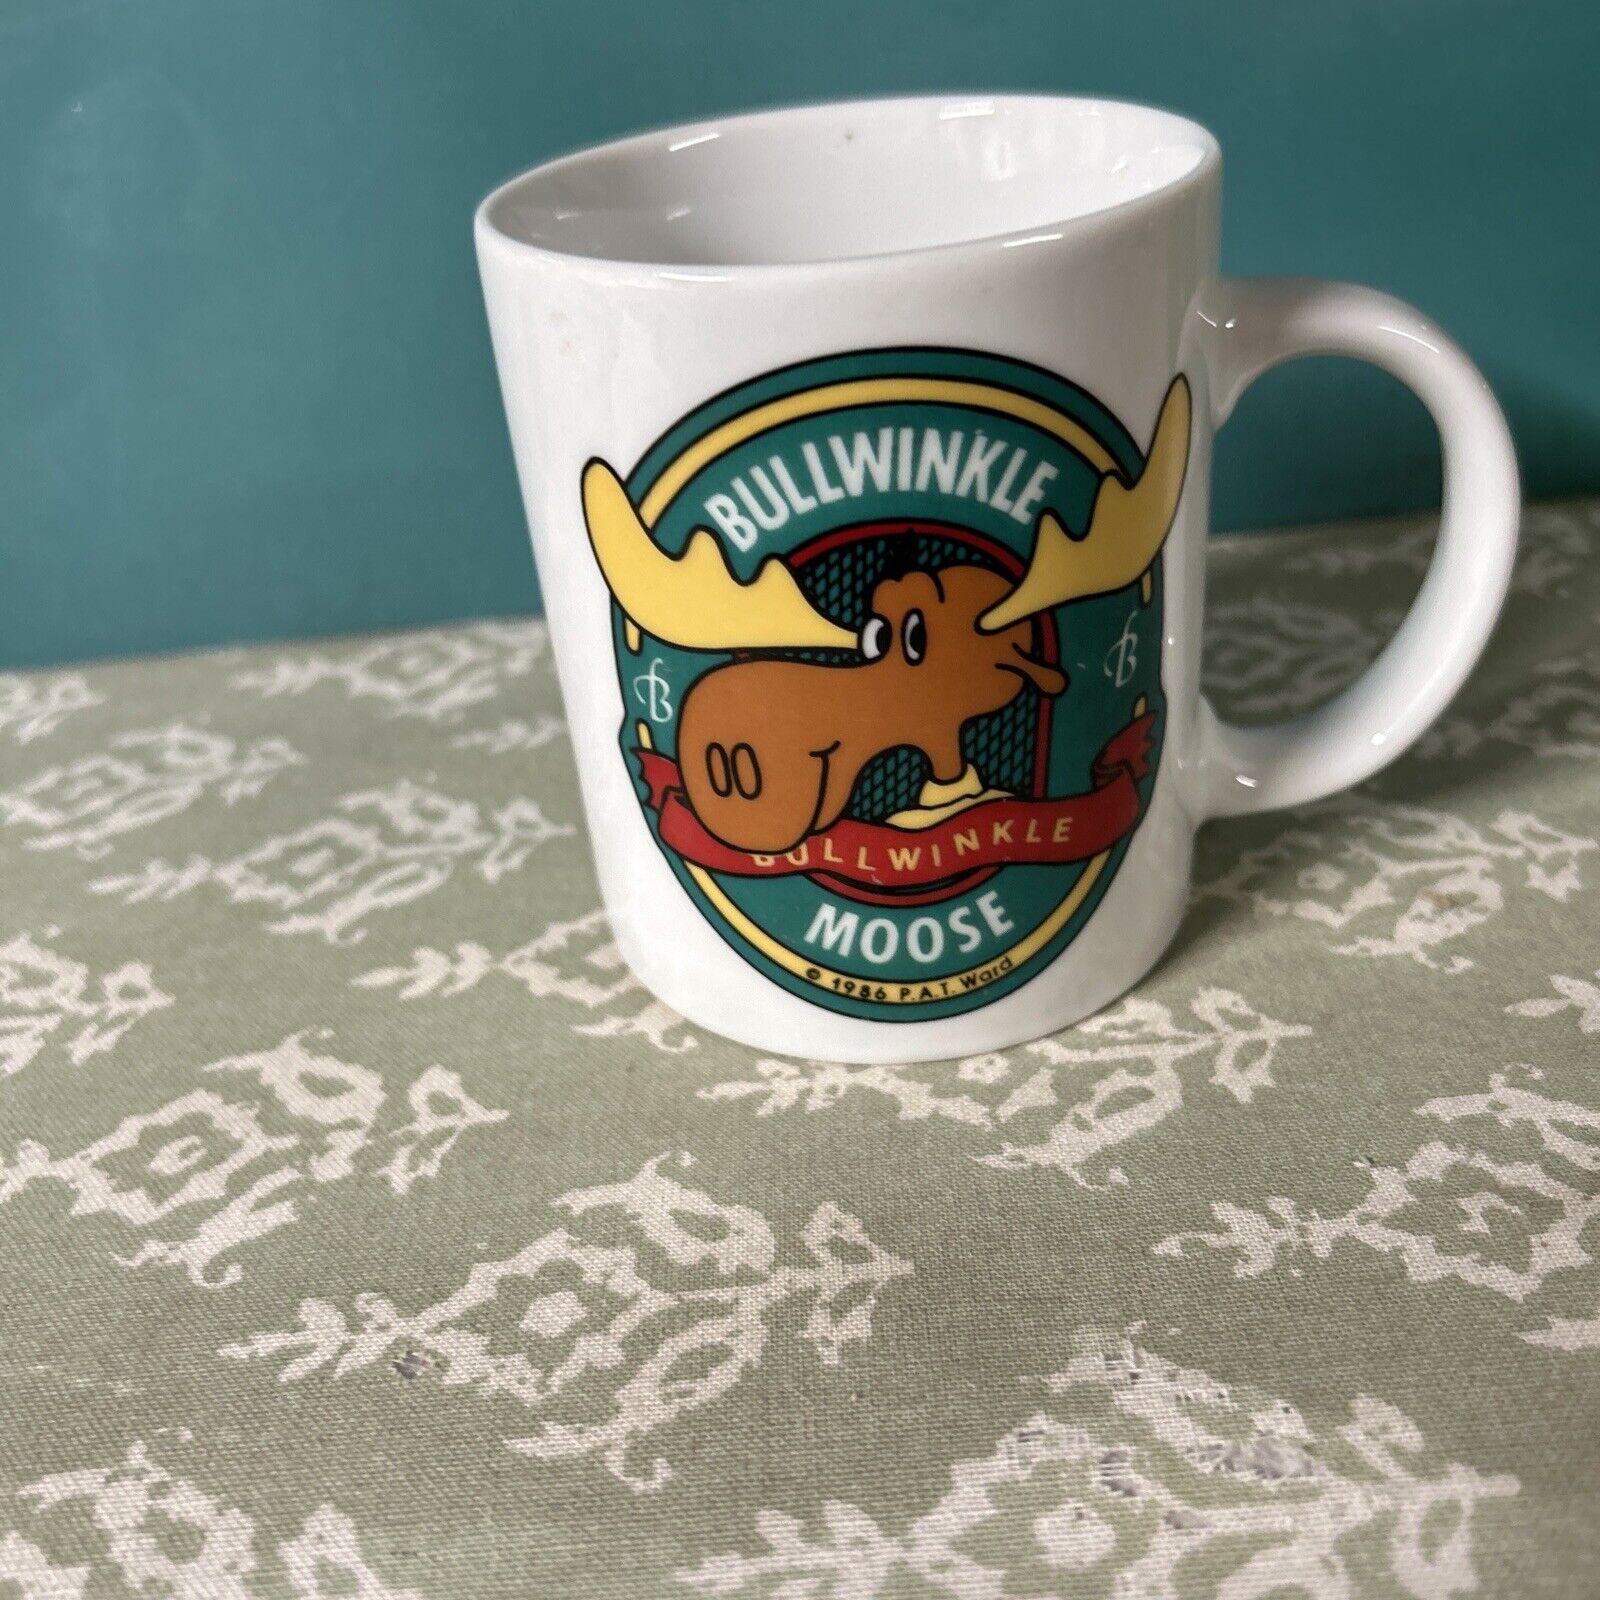 Vintage 1986 Bullwinkle Moose Coffee Mug White N. J. Croce Company